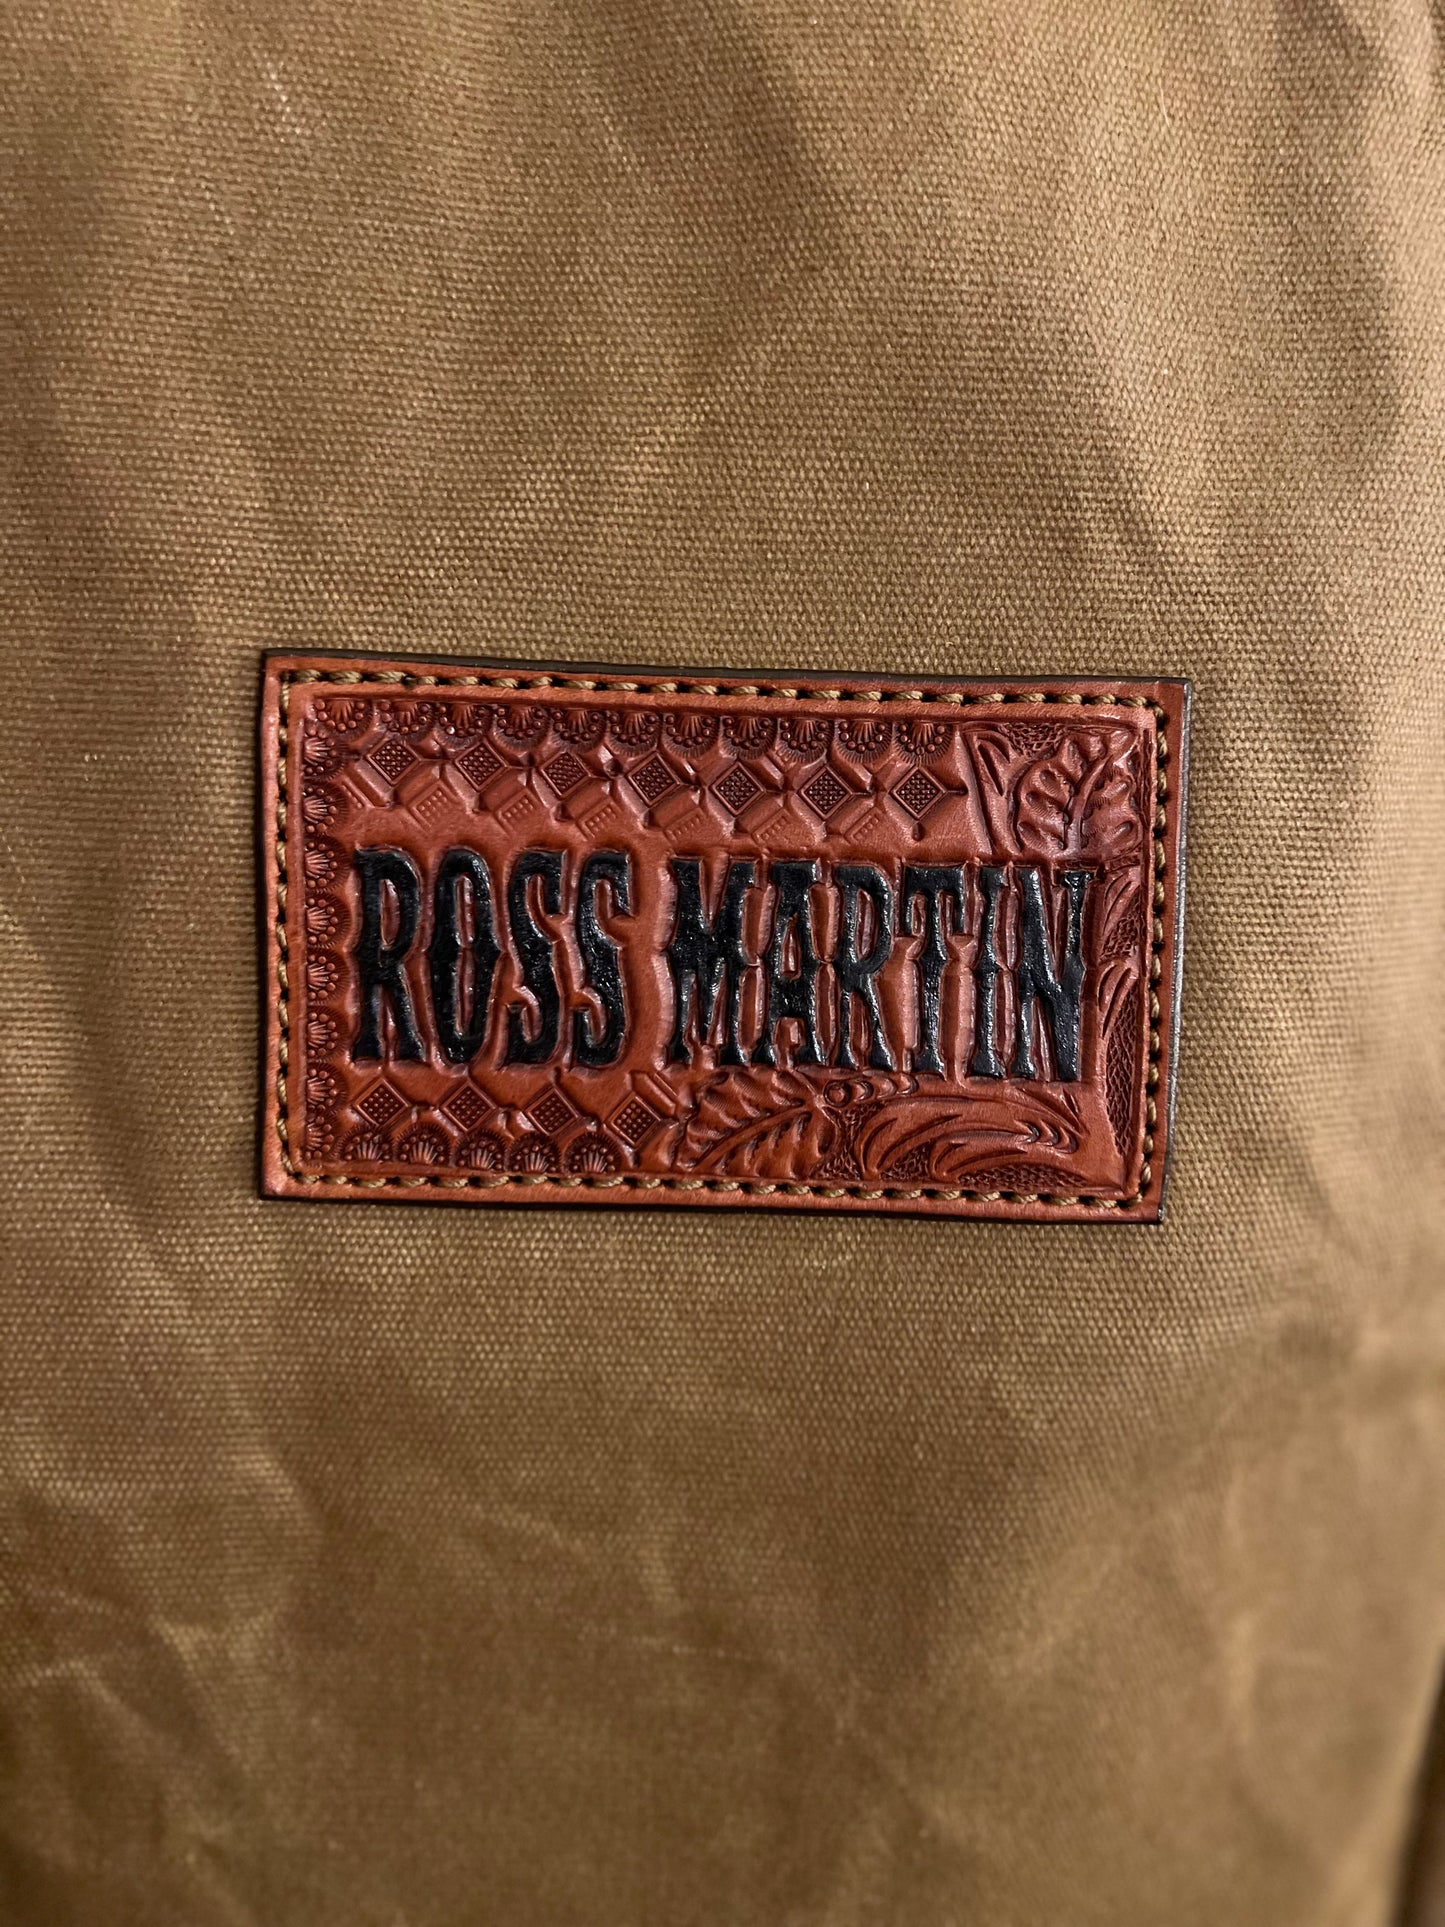 Custom Leather Trim Garment Bag Award (set of 4)